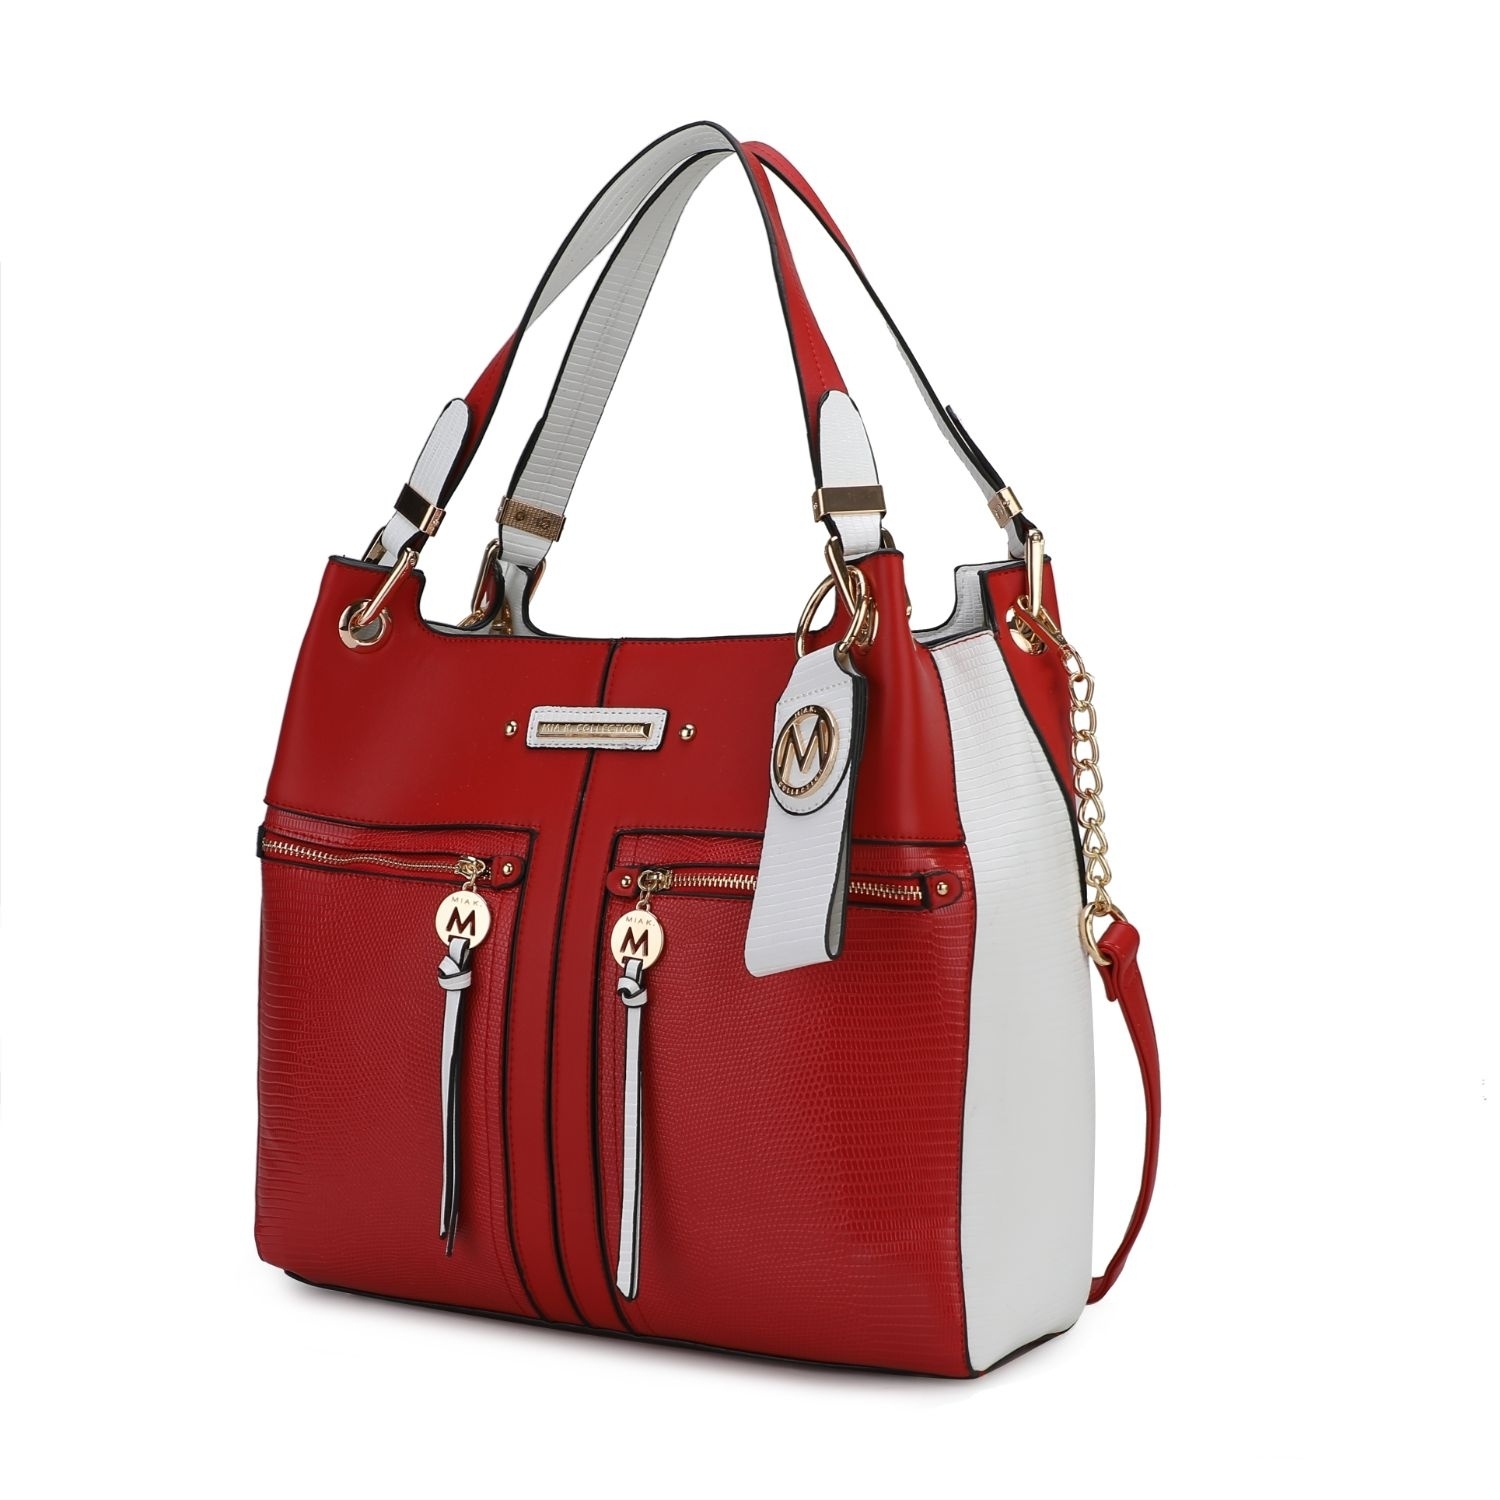 MKF Collection Sofia Tote 2 Pcs Handbag With Keyring By Mia K. - Red